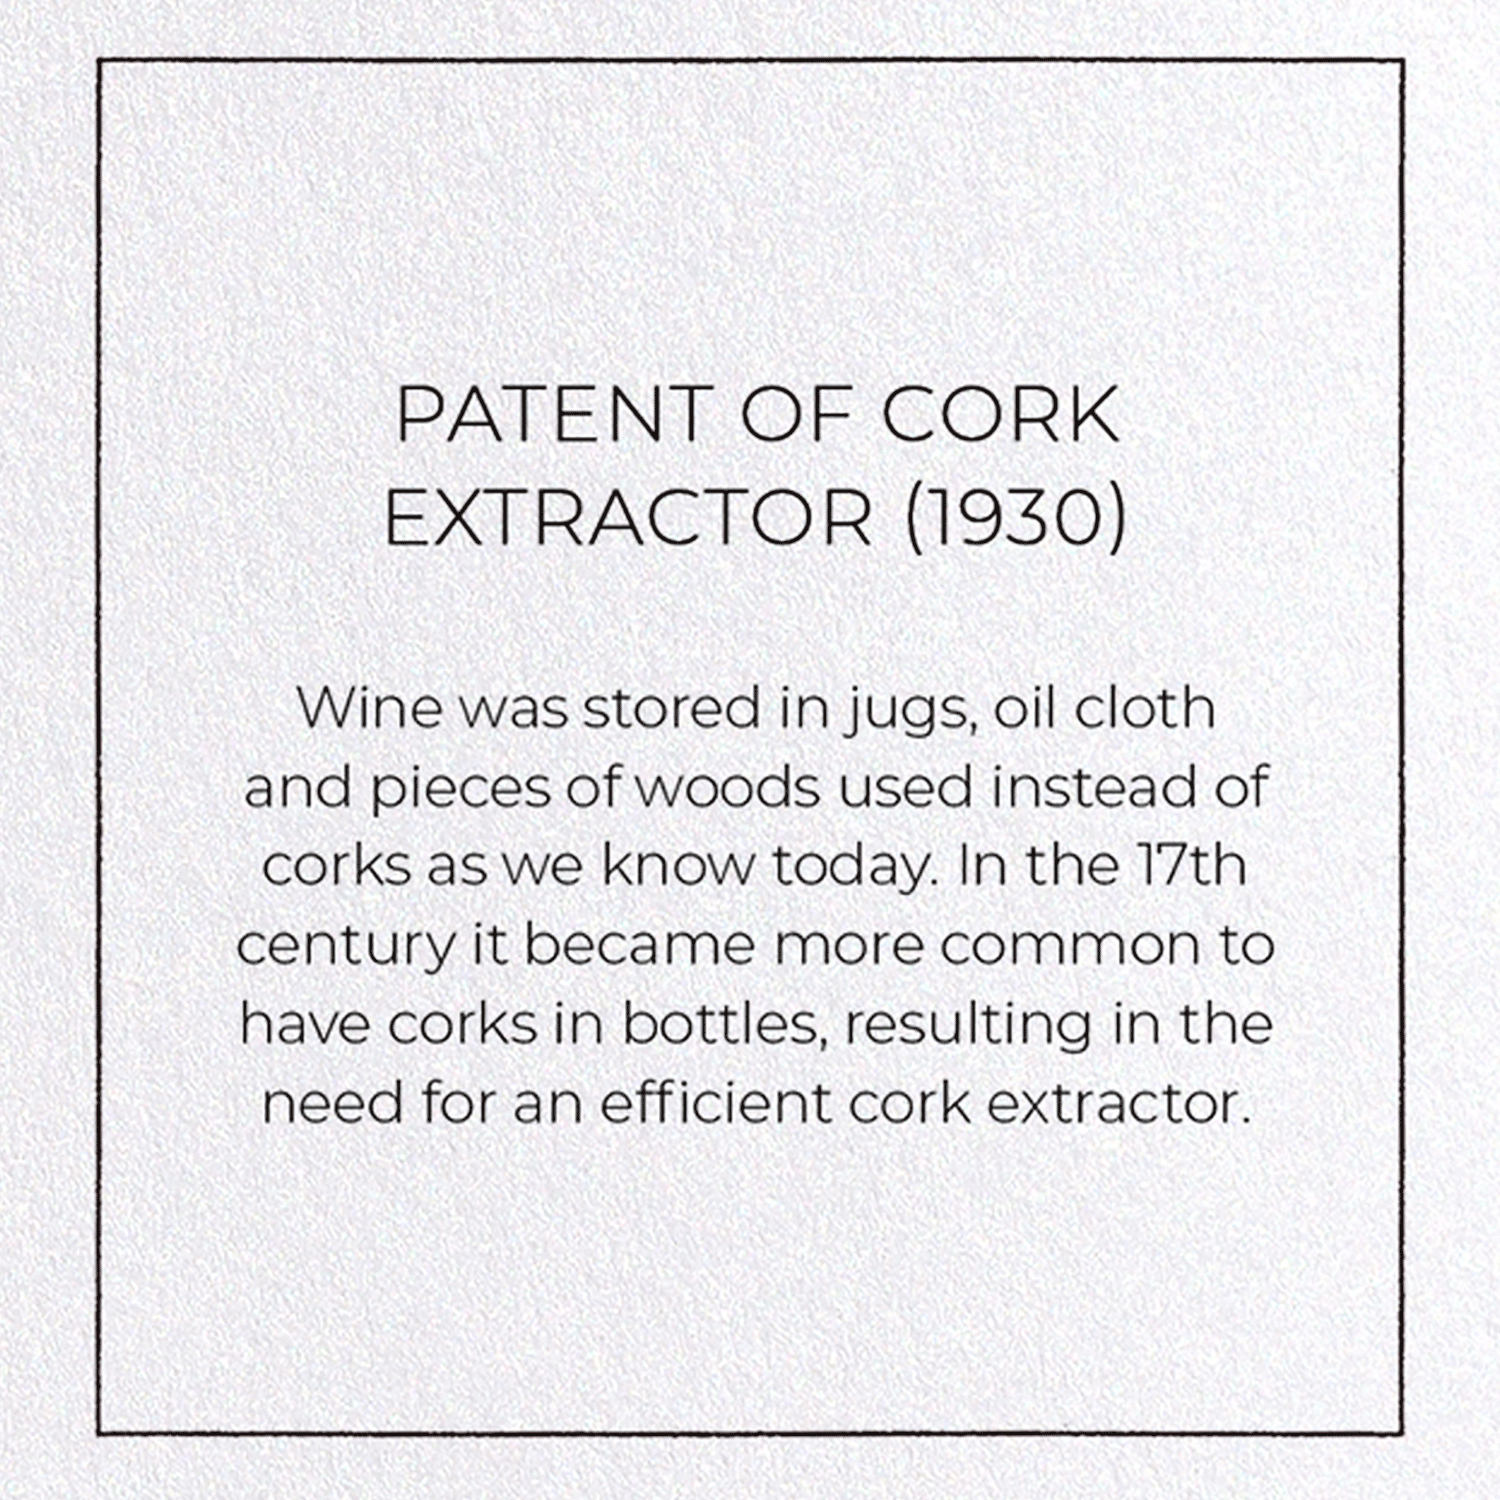 PATENT OF CORK EXTRACTOR (1930)